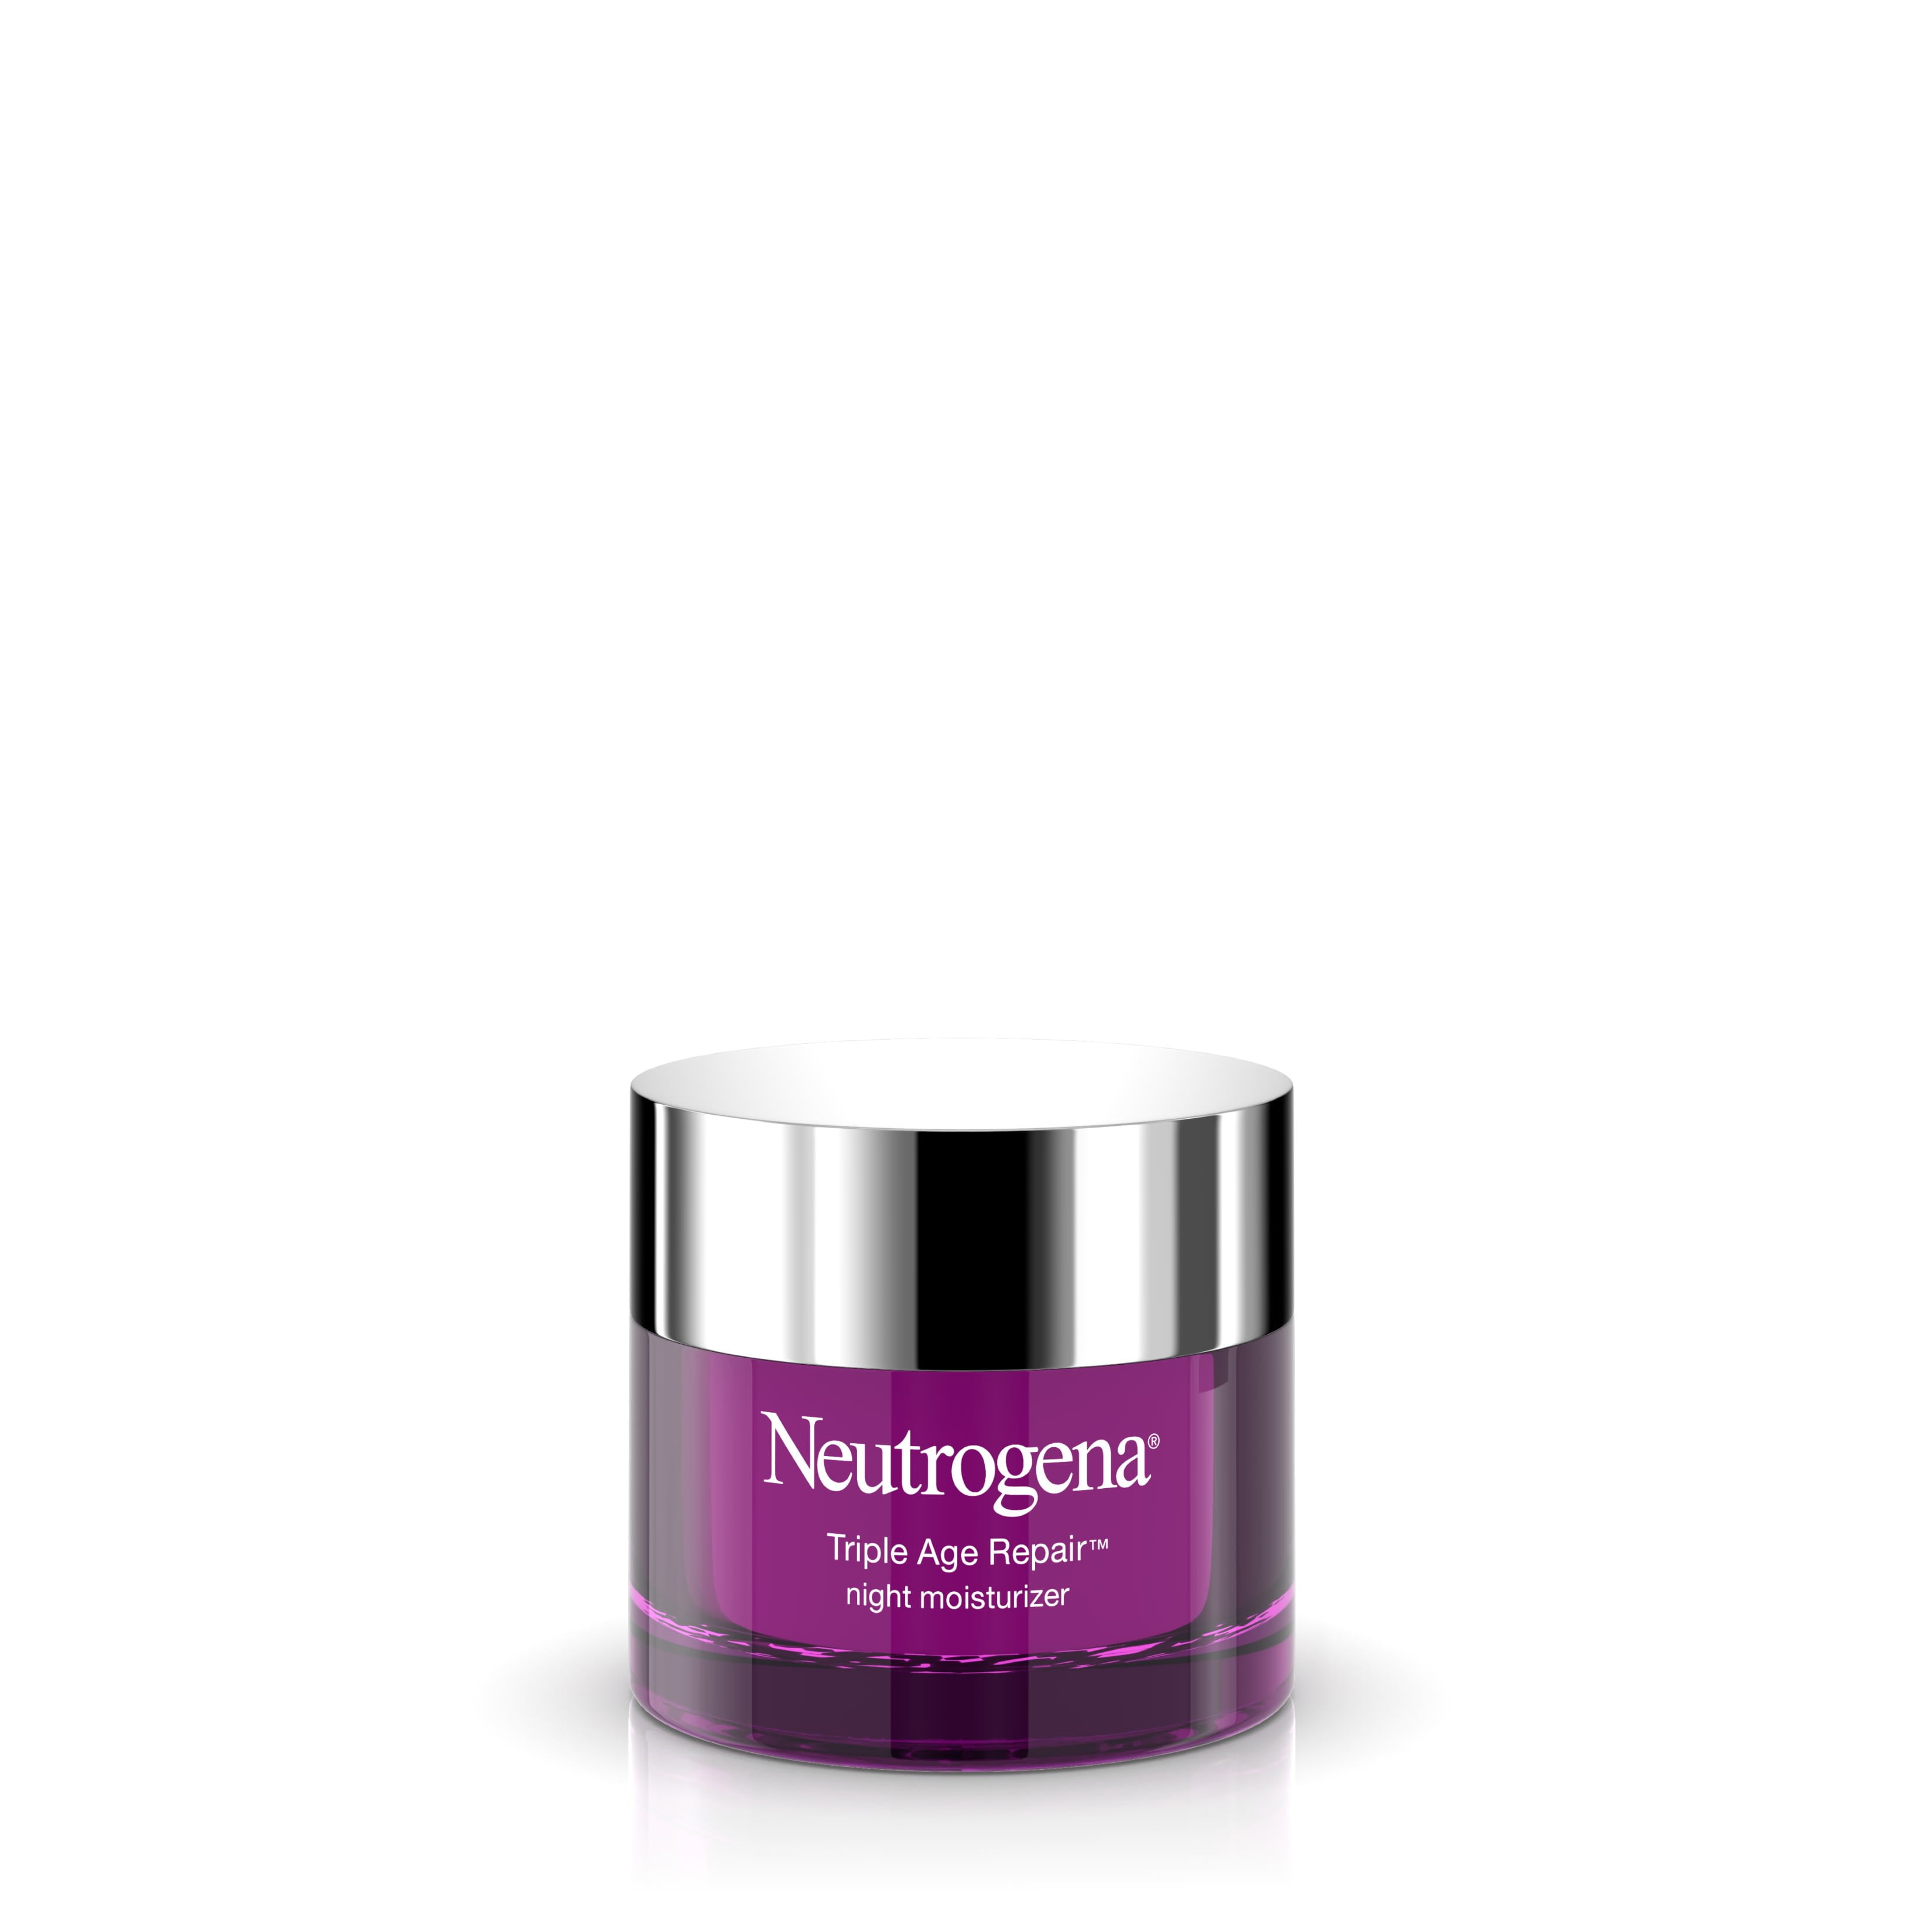 Neutrogena Triple Age Repair Anti-Aging Night Face Moisturizer, 1.7 oz